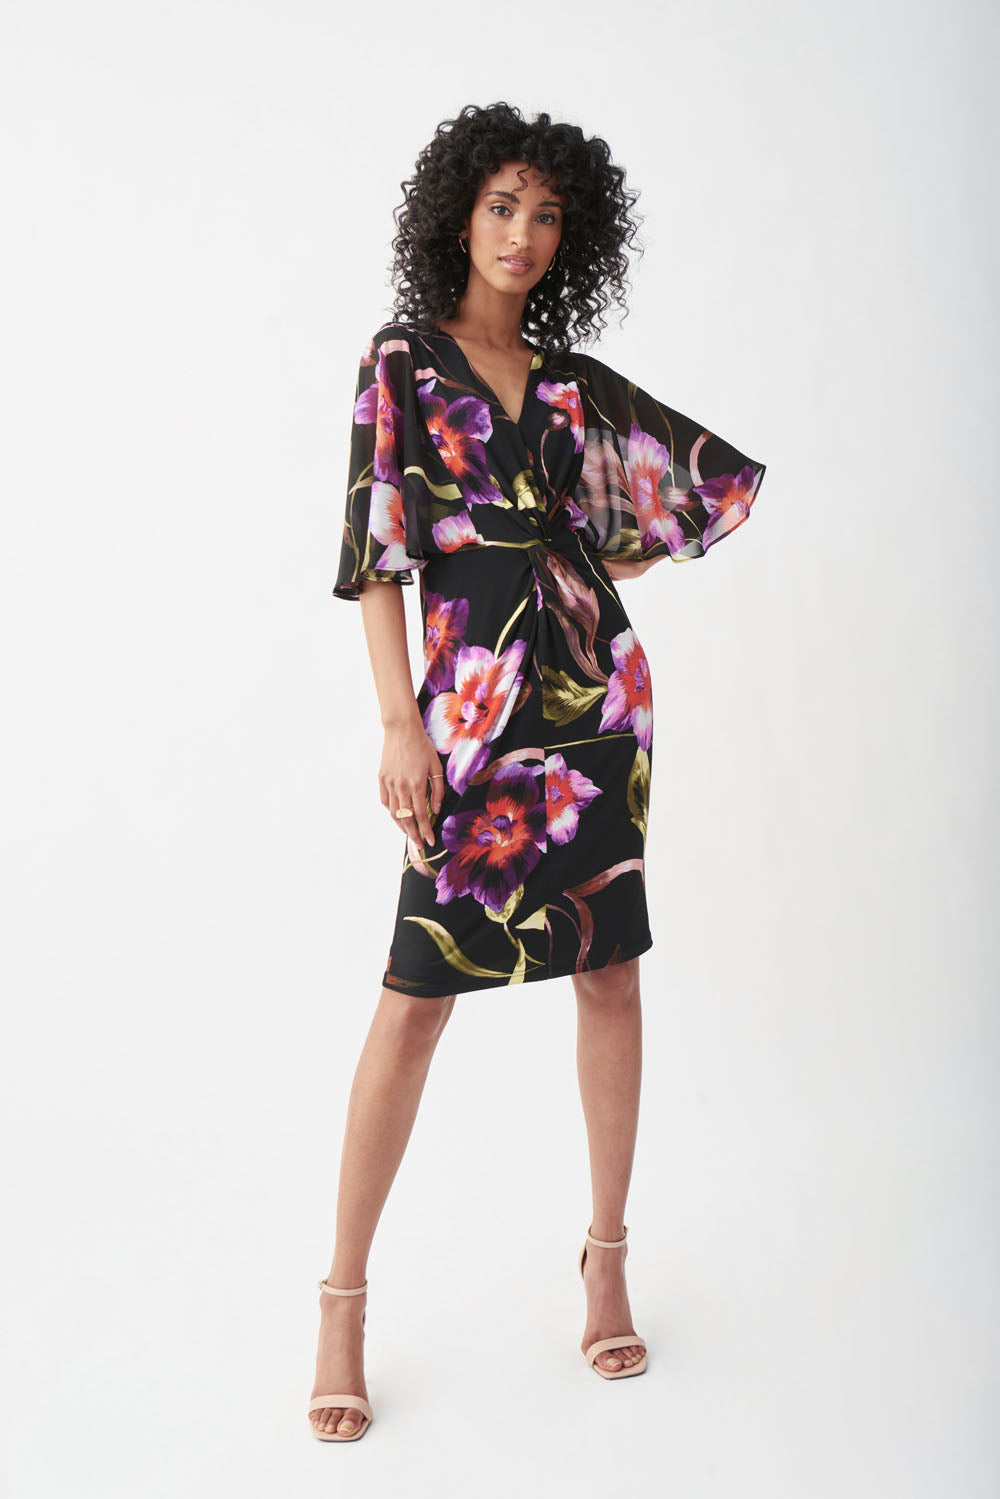 Joseph Ribkoff Black-Multi Floral Print Dress Style 221067